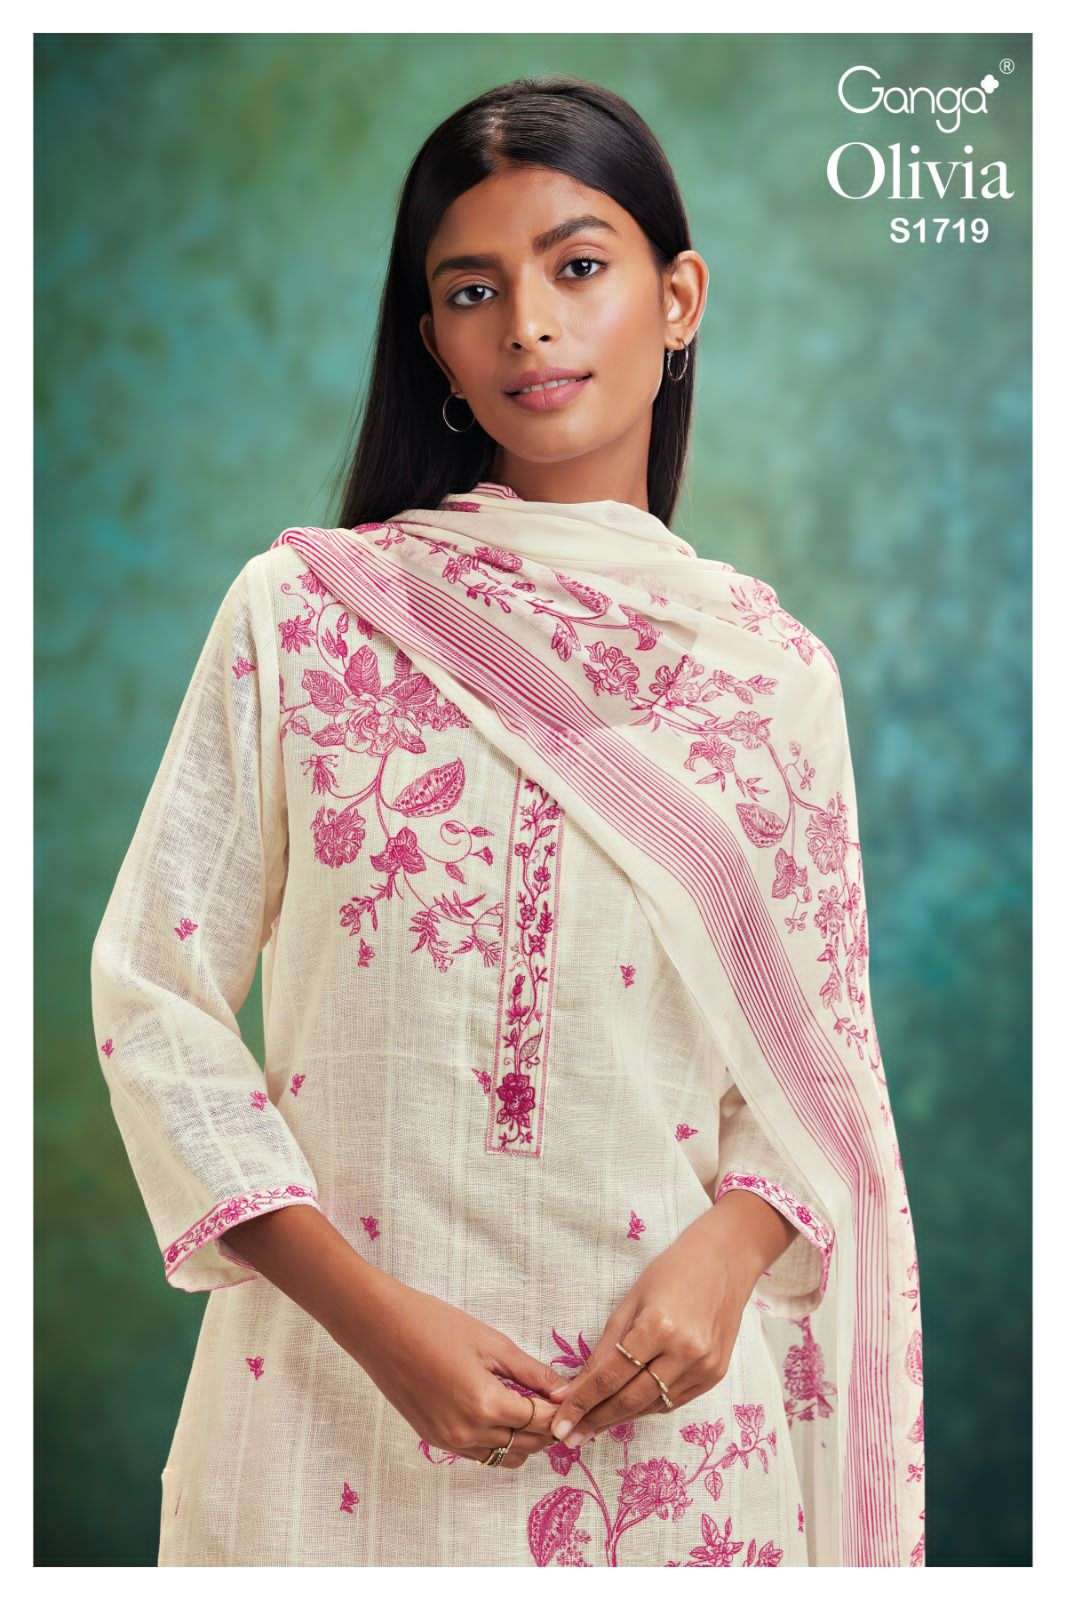 ganga olivia 1719 series stylish designer salwar kameez catalogue manufacturer in surat 5 2023 05 17 10 42 48